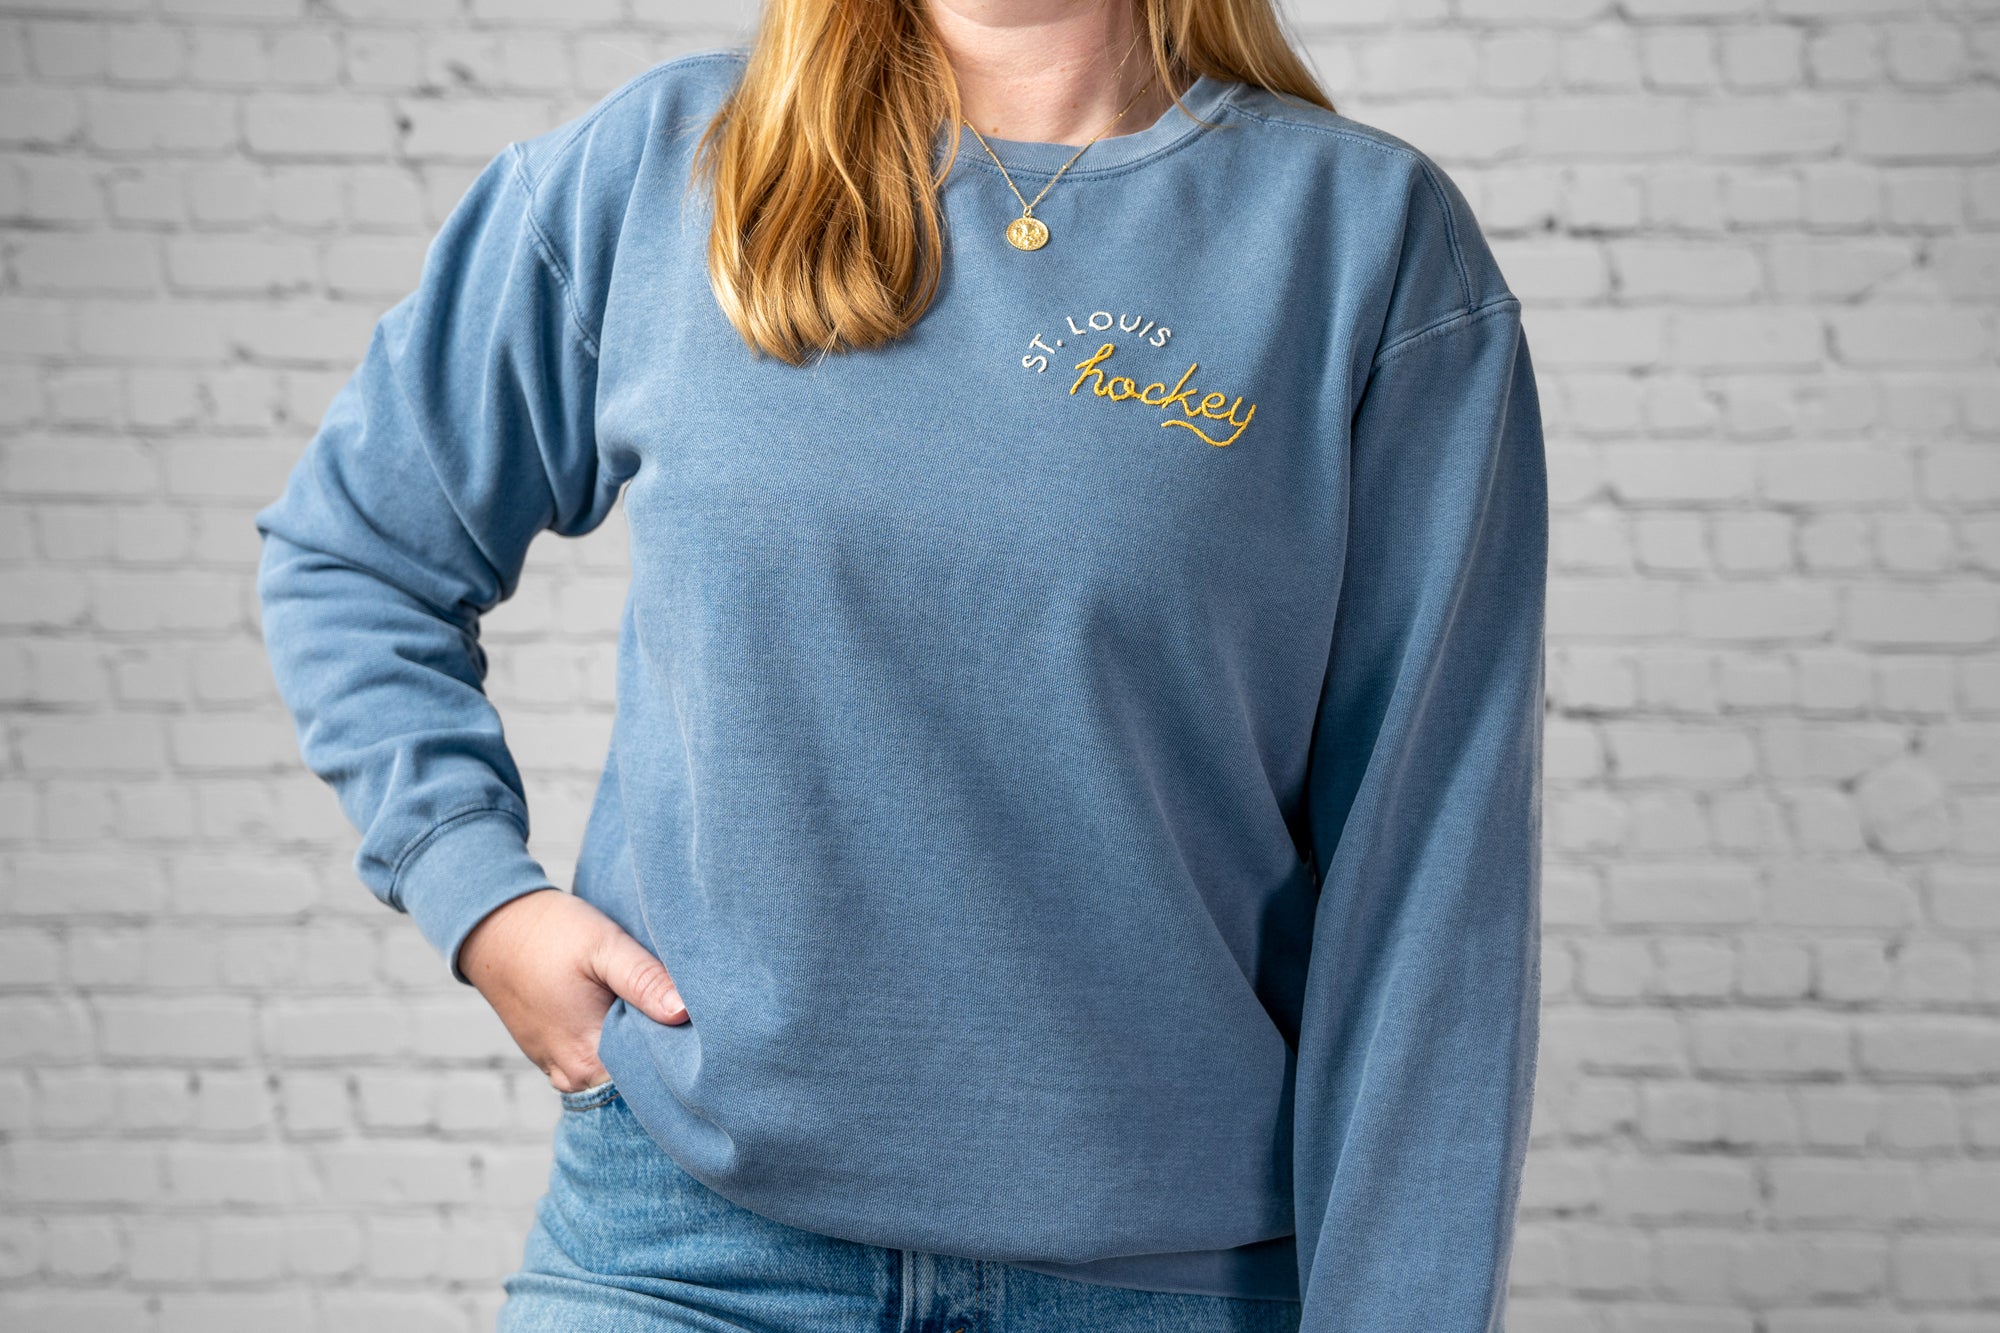 St. Louis Hockey Hand Embroidered Sweatshirt